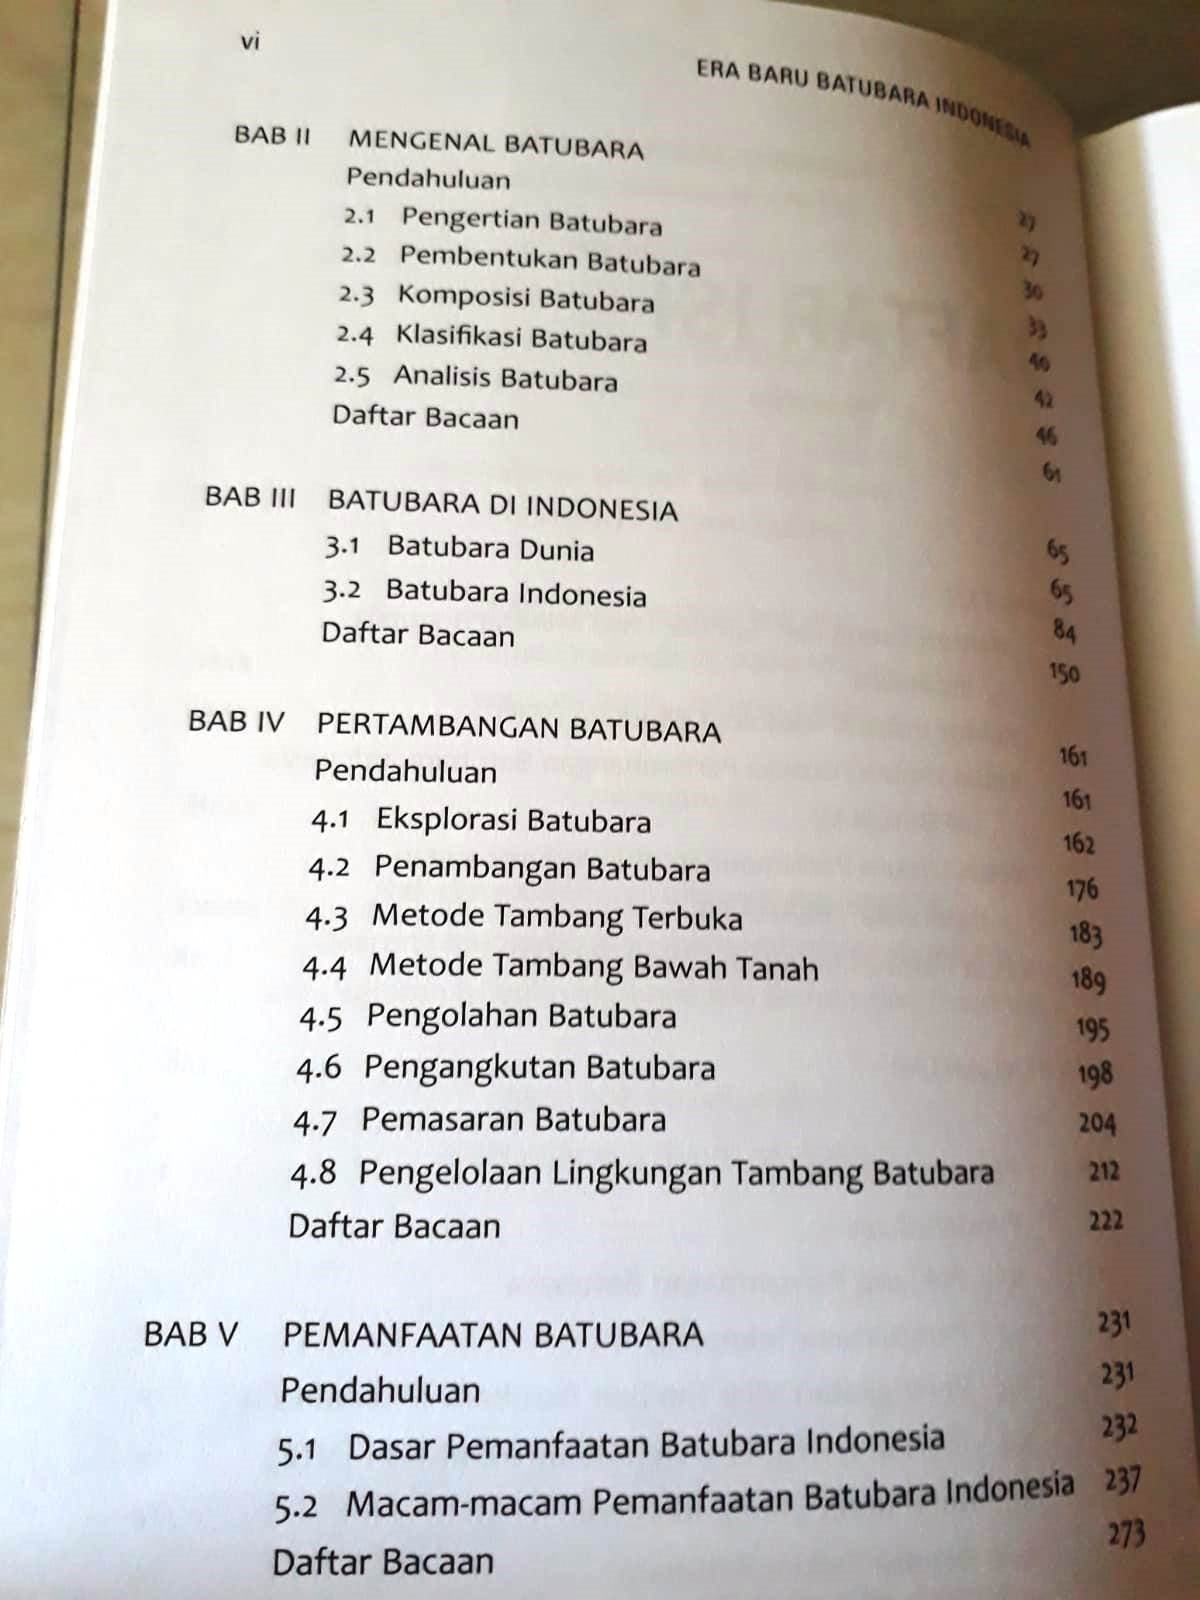 Daftar Isi Buku Era Baru Batubara Indonesia Karya Prof. Dr. Ir. Irwandy Arif, M.Sc Penerbit Gramedia